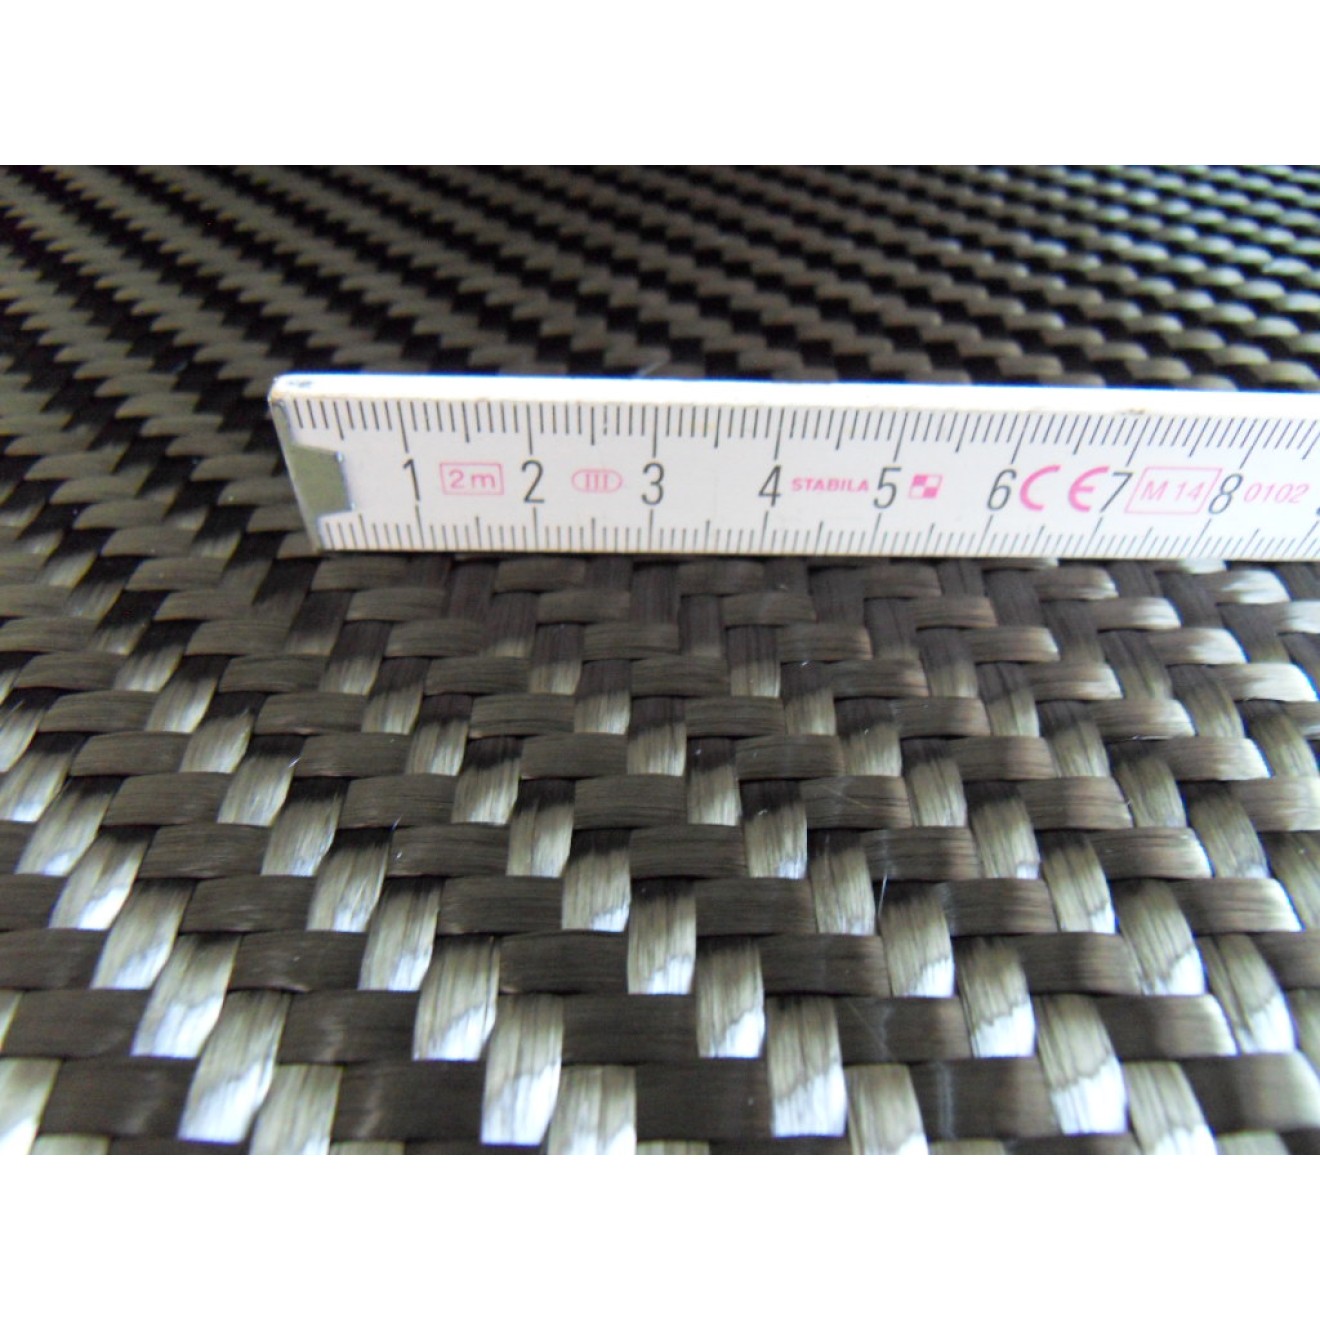 Woven carbon fiber fabric 24K 800g/m², twill 2/2, roll length 25m